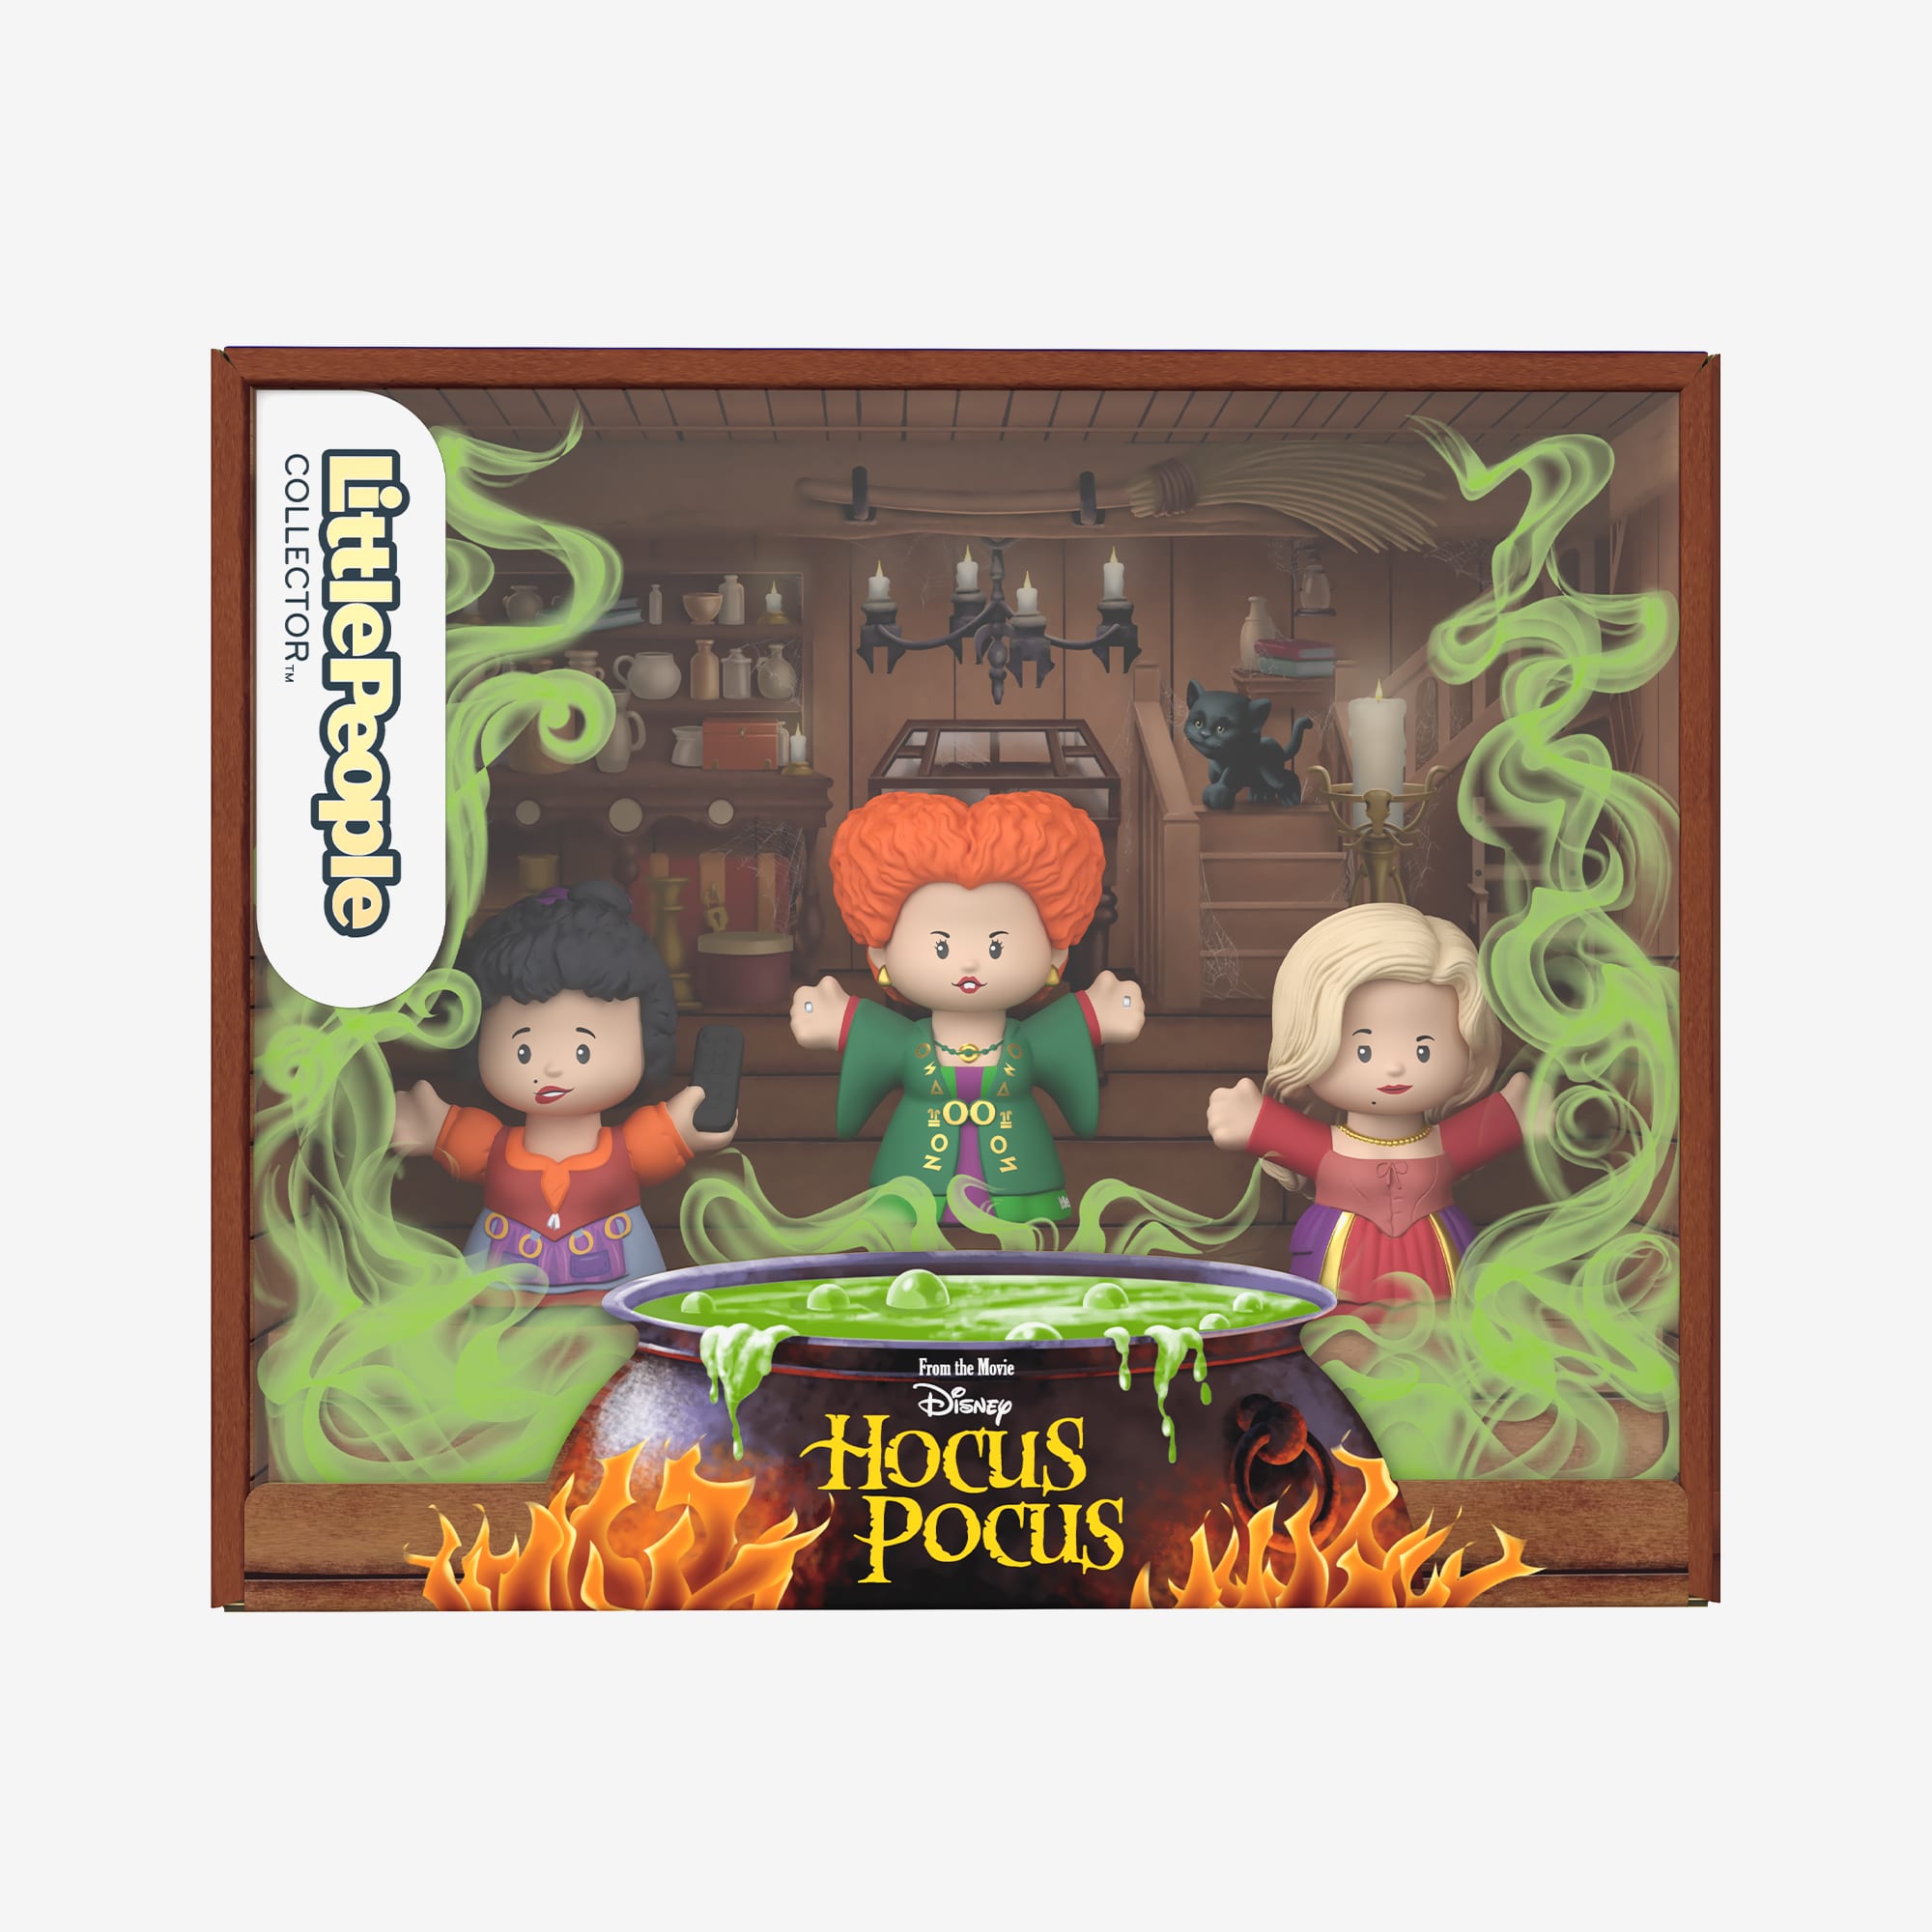 Little People Collector Disney Hocus Pocus Special Edition Figure Set